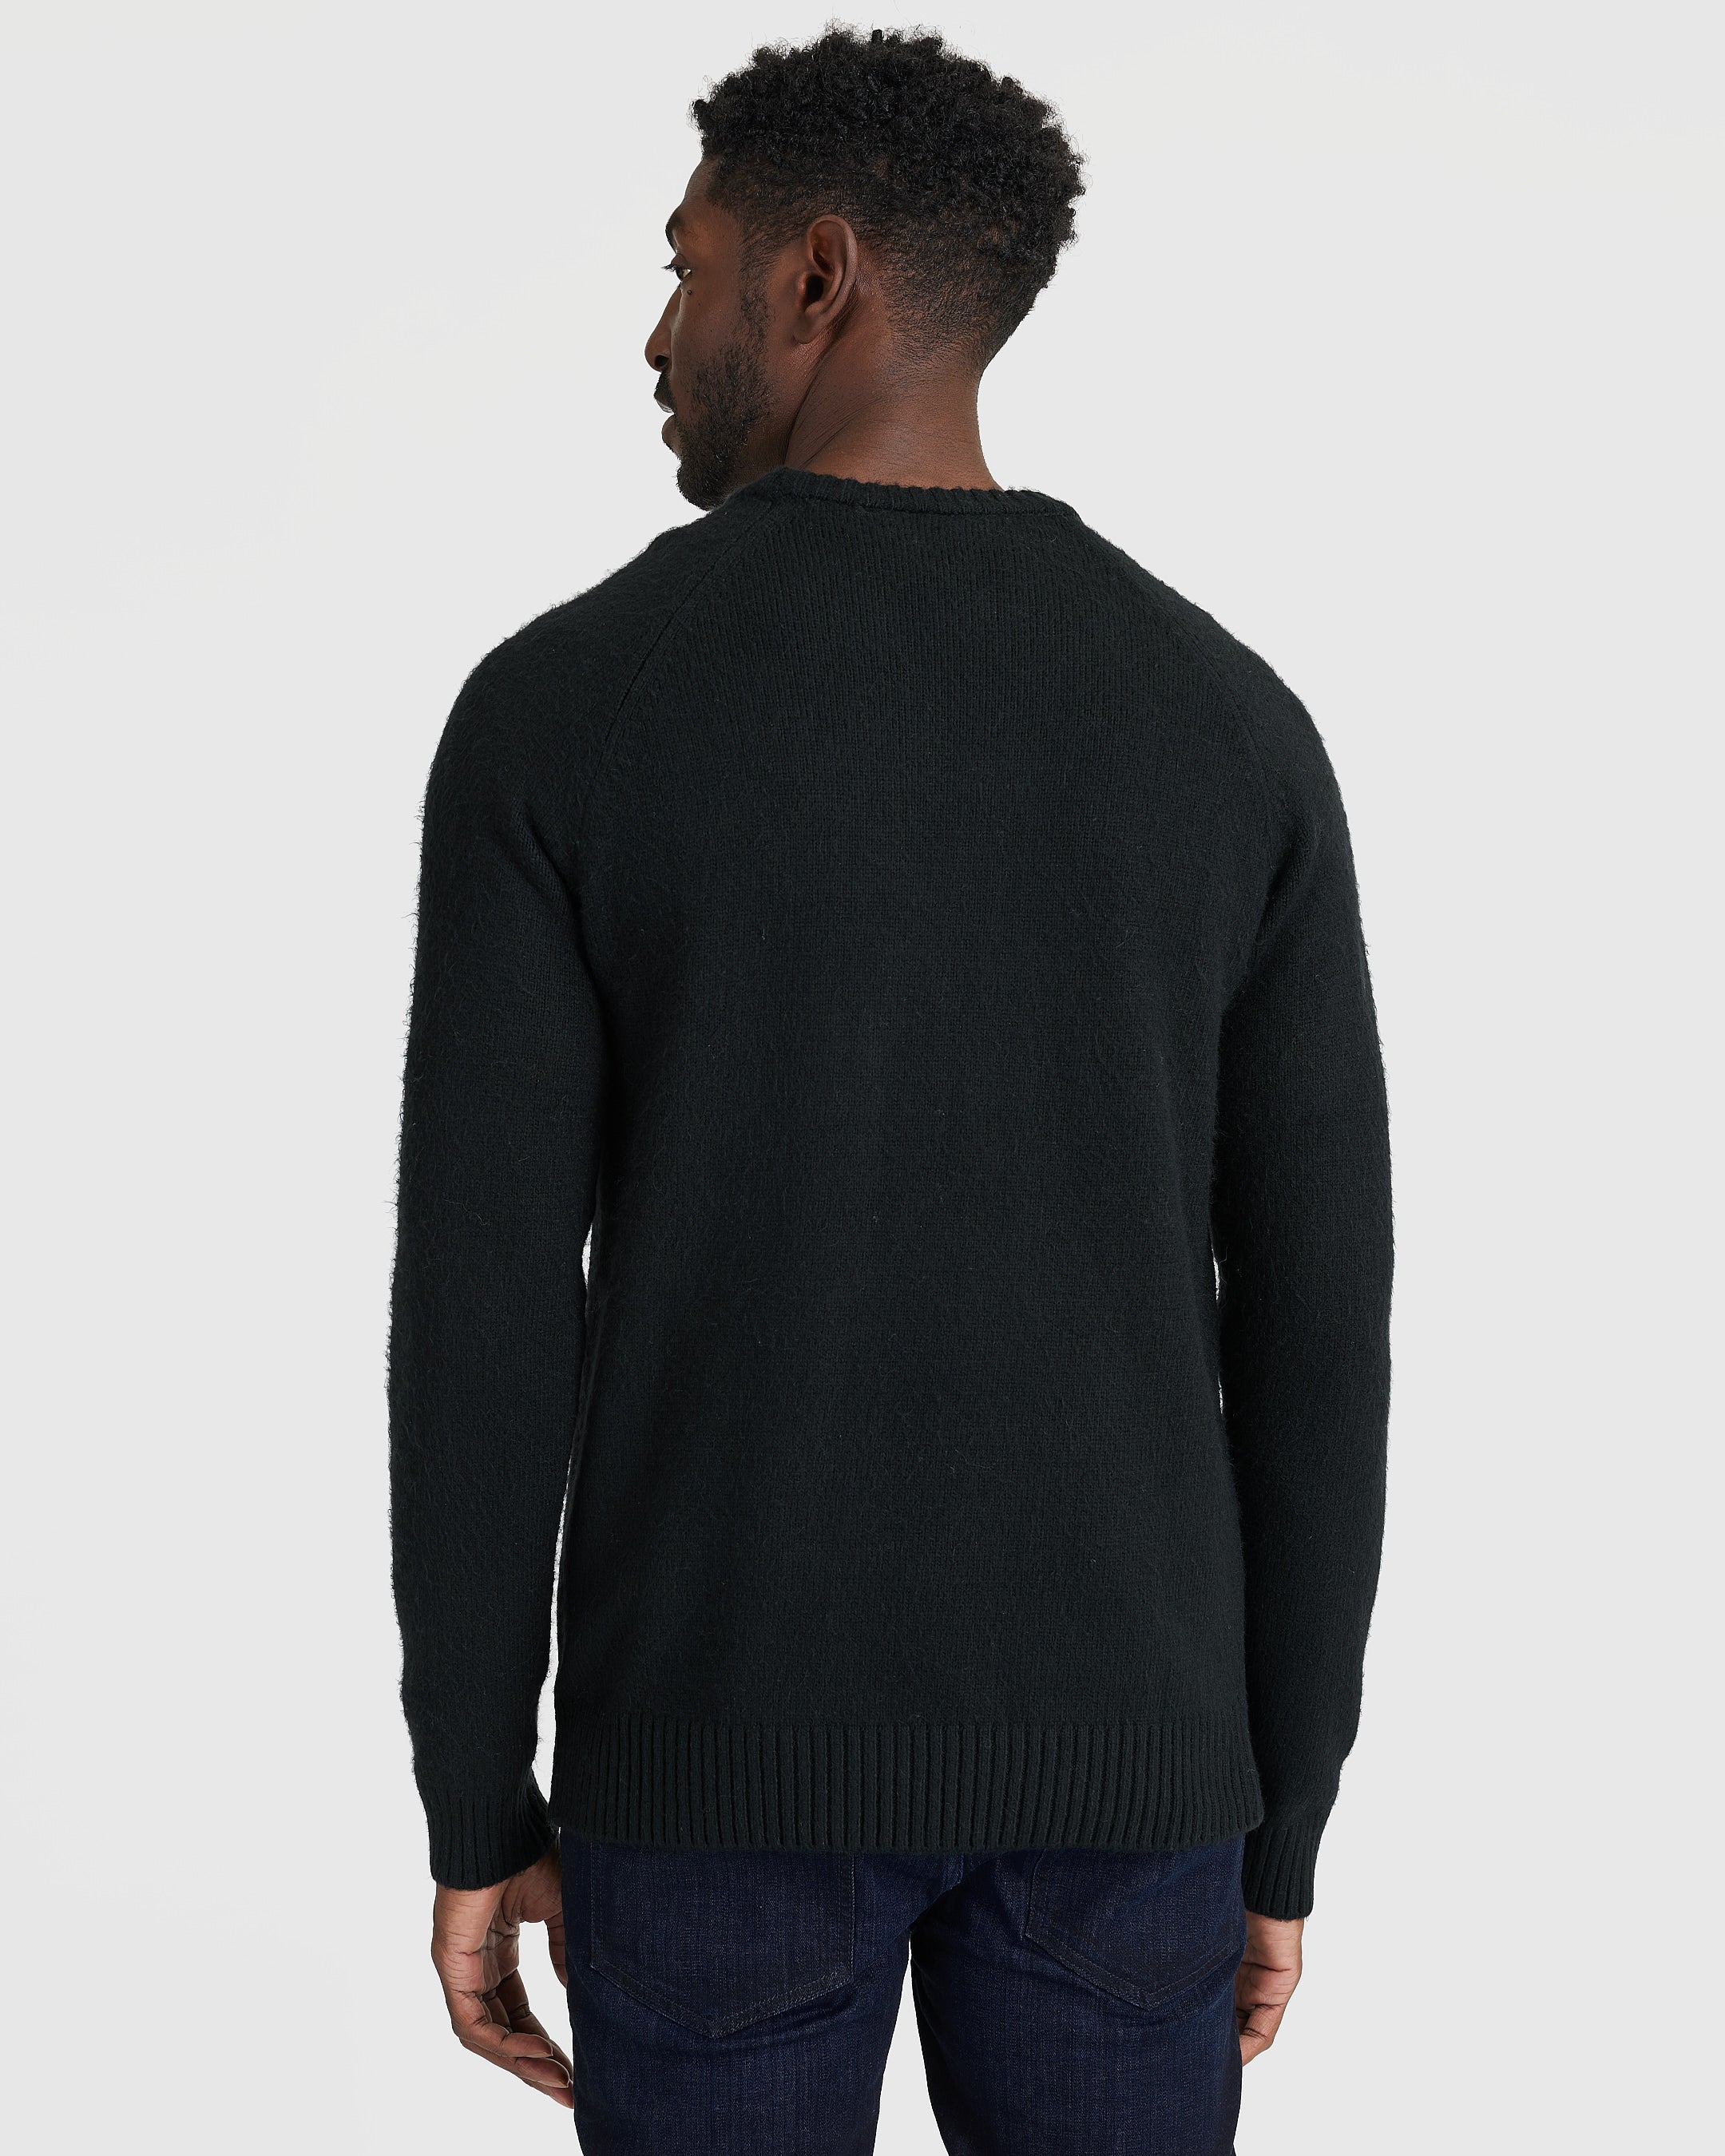 Black Crew Neck Sweater | Black Crew Neck Sweater | True Classic